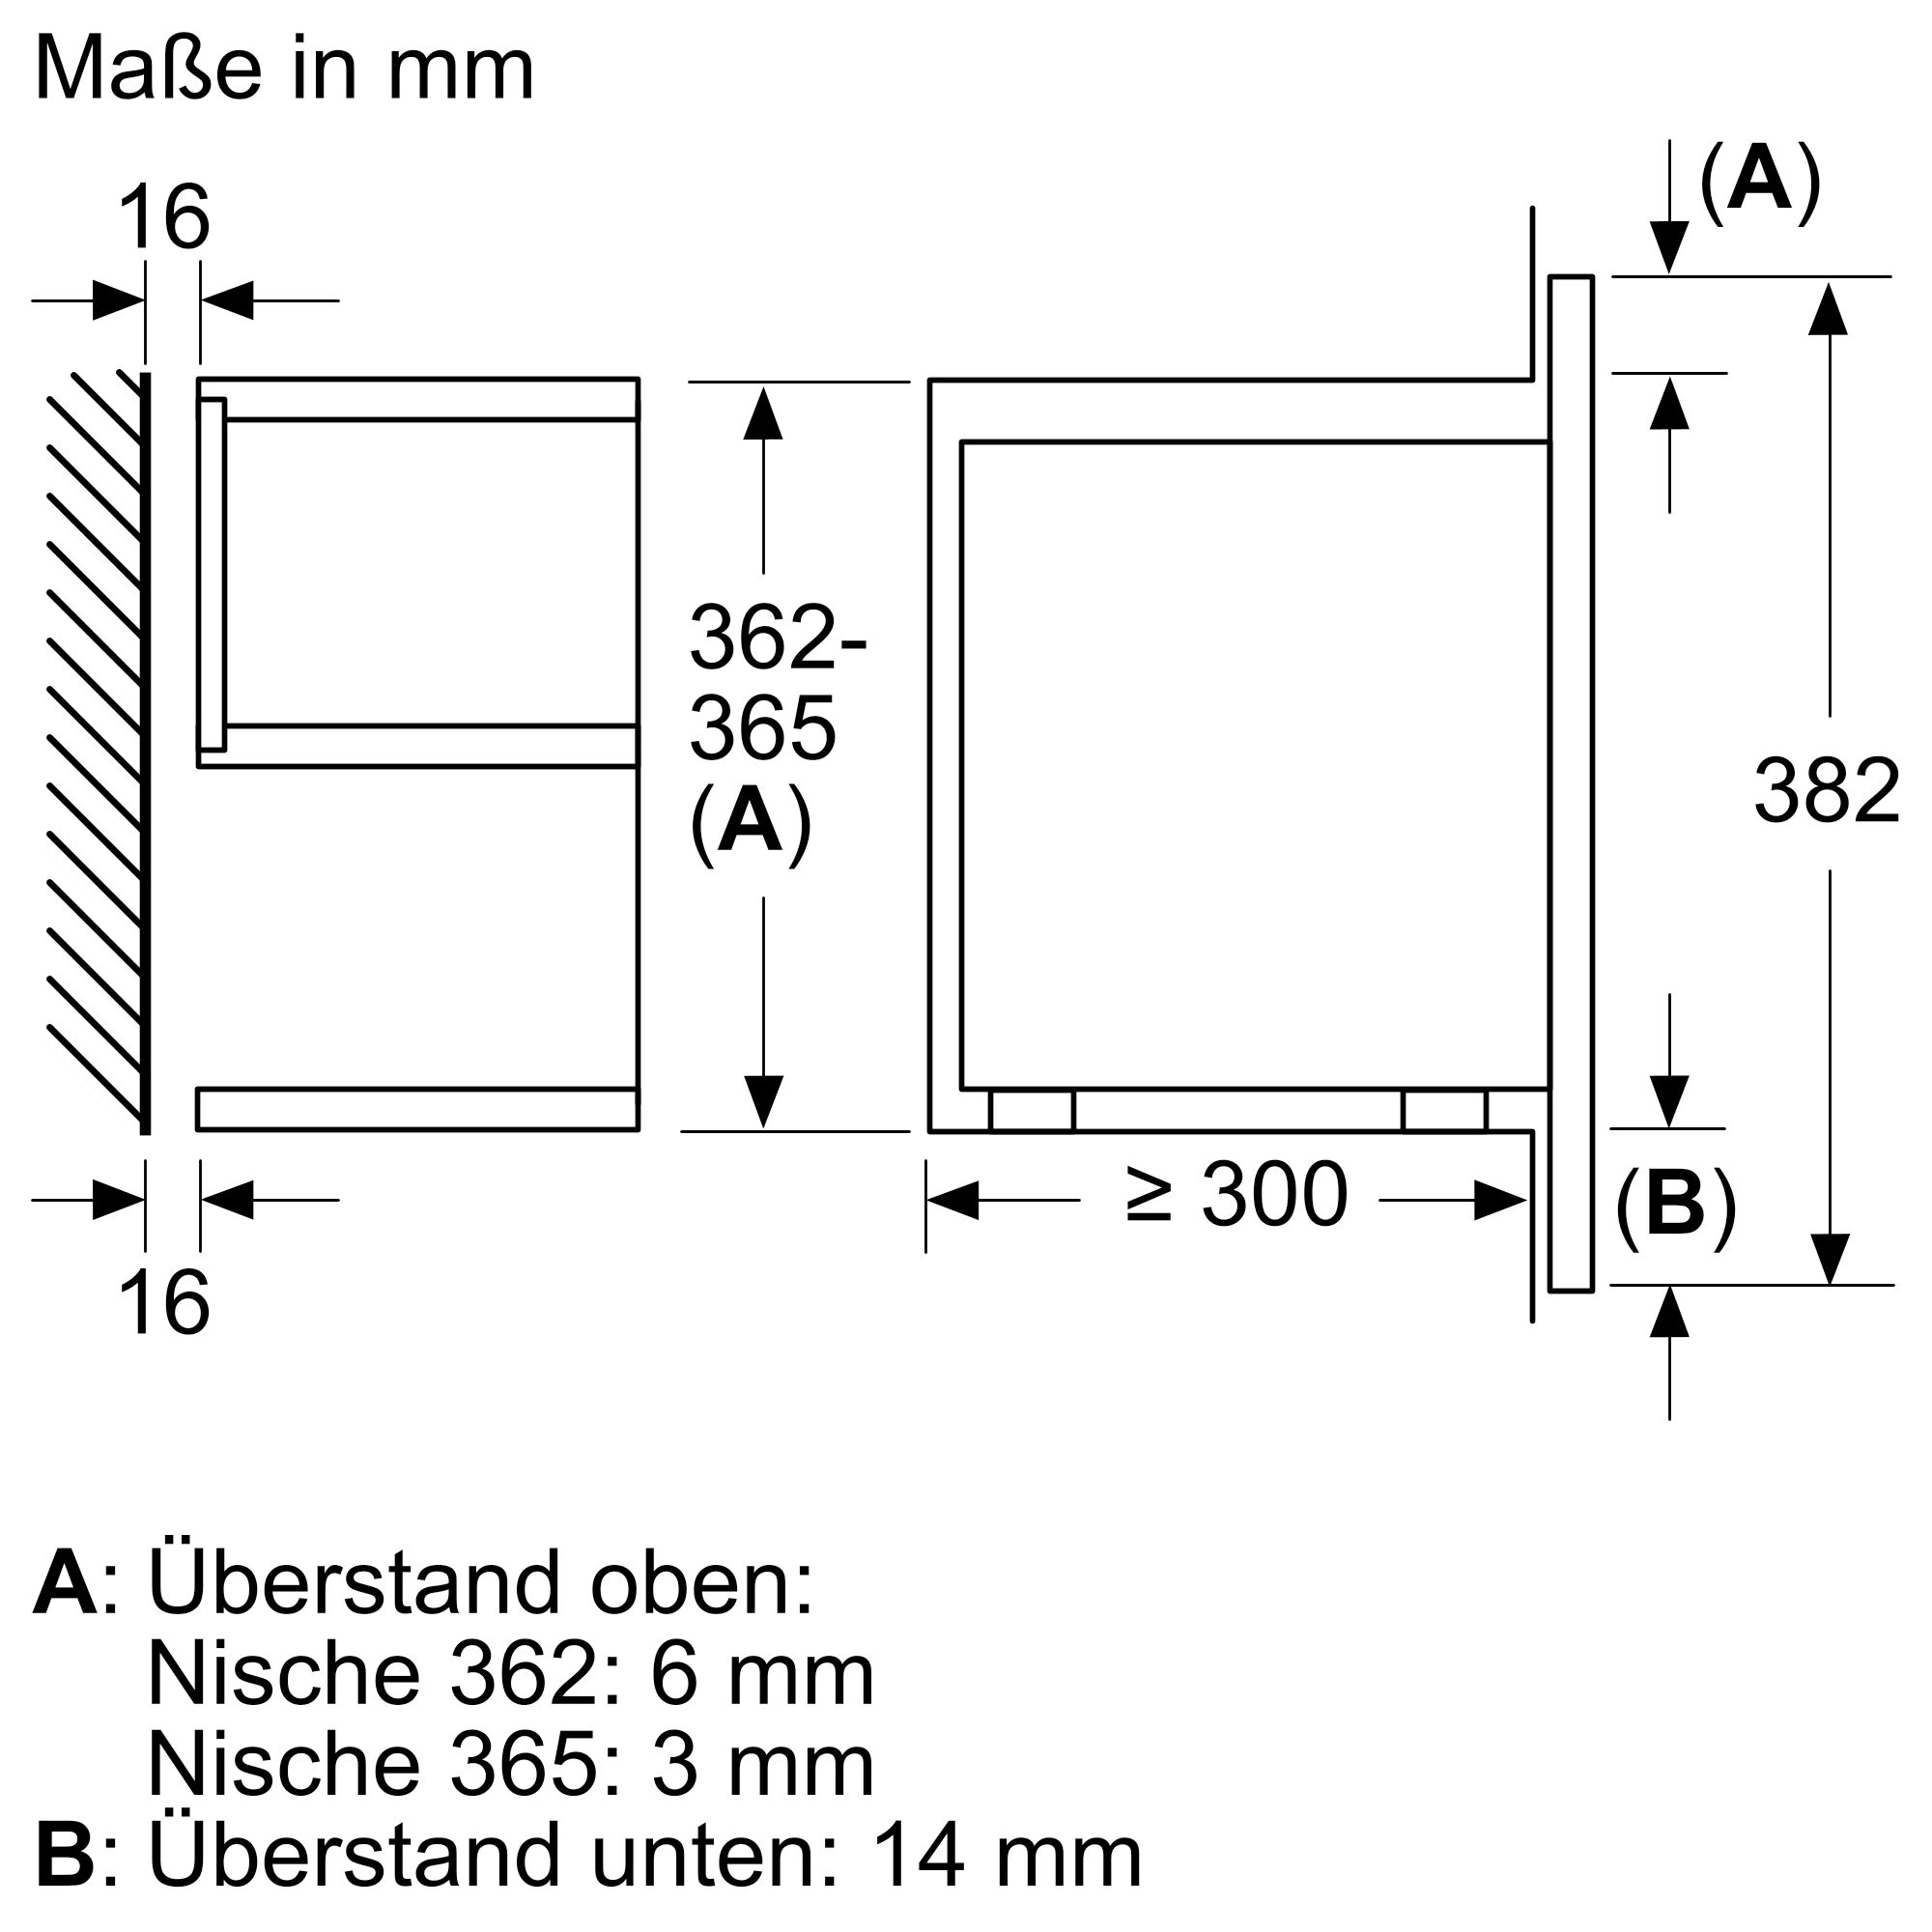 Siemens BF922L1B1 Einbau-Mikrowelle Schwarz